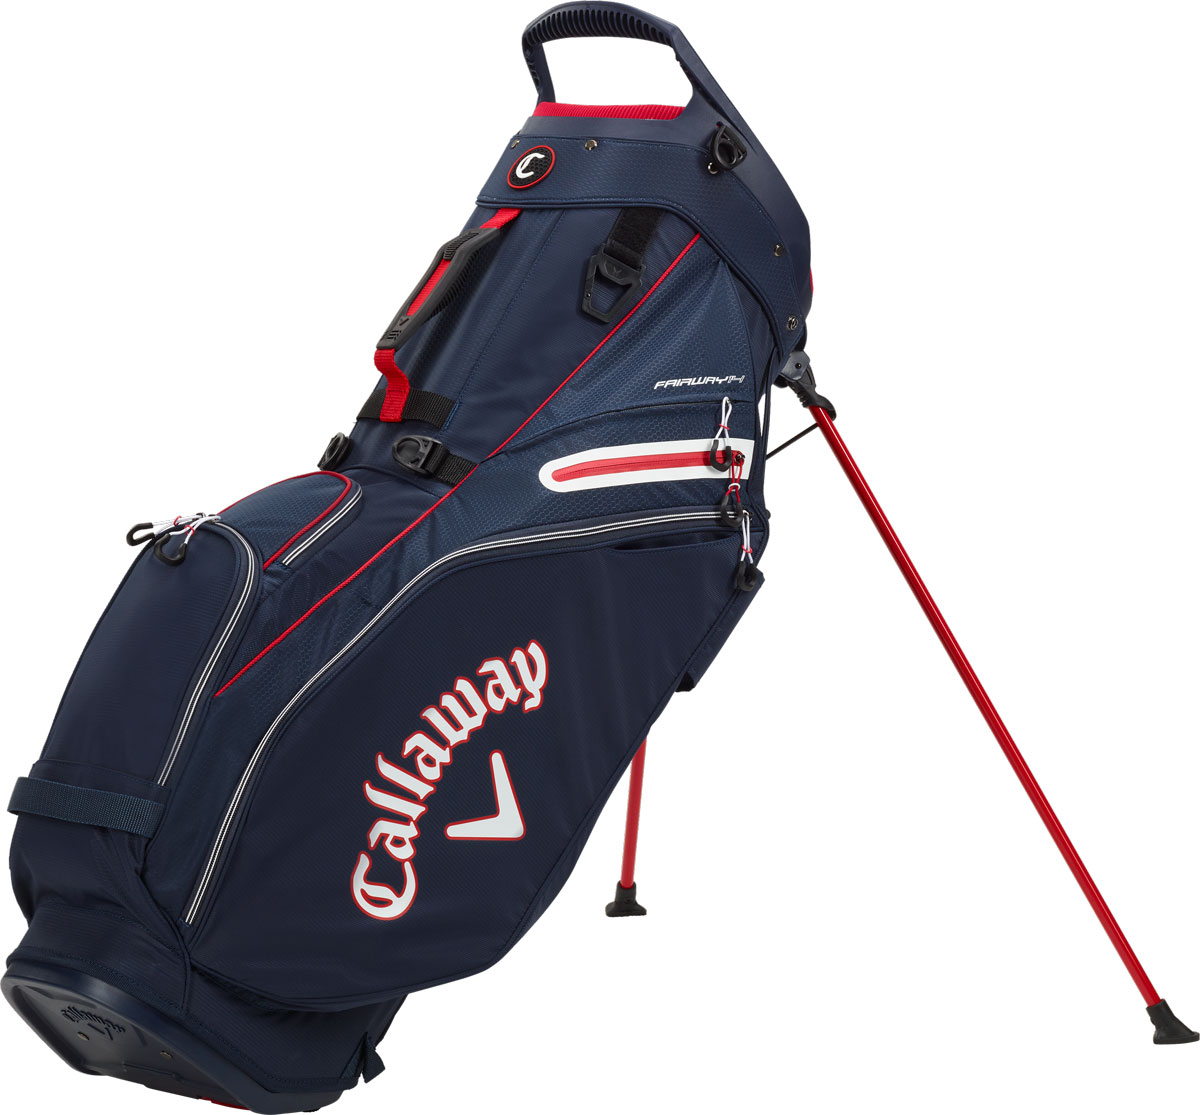 Callaway Fairway 14 Stand Golf Bags